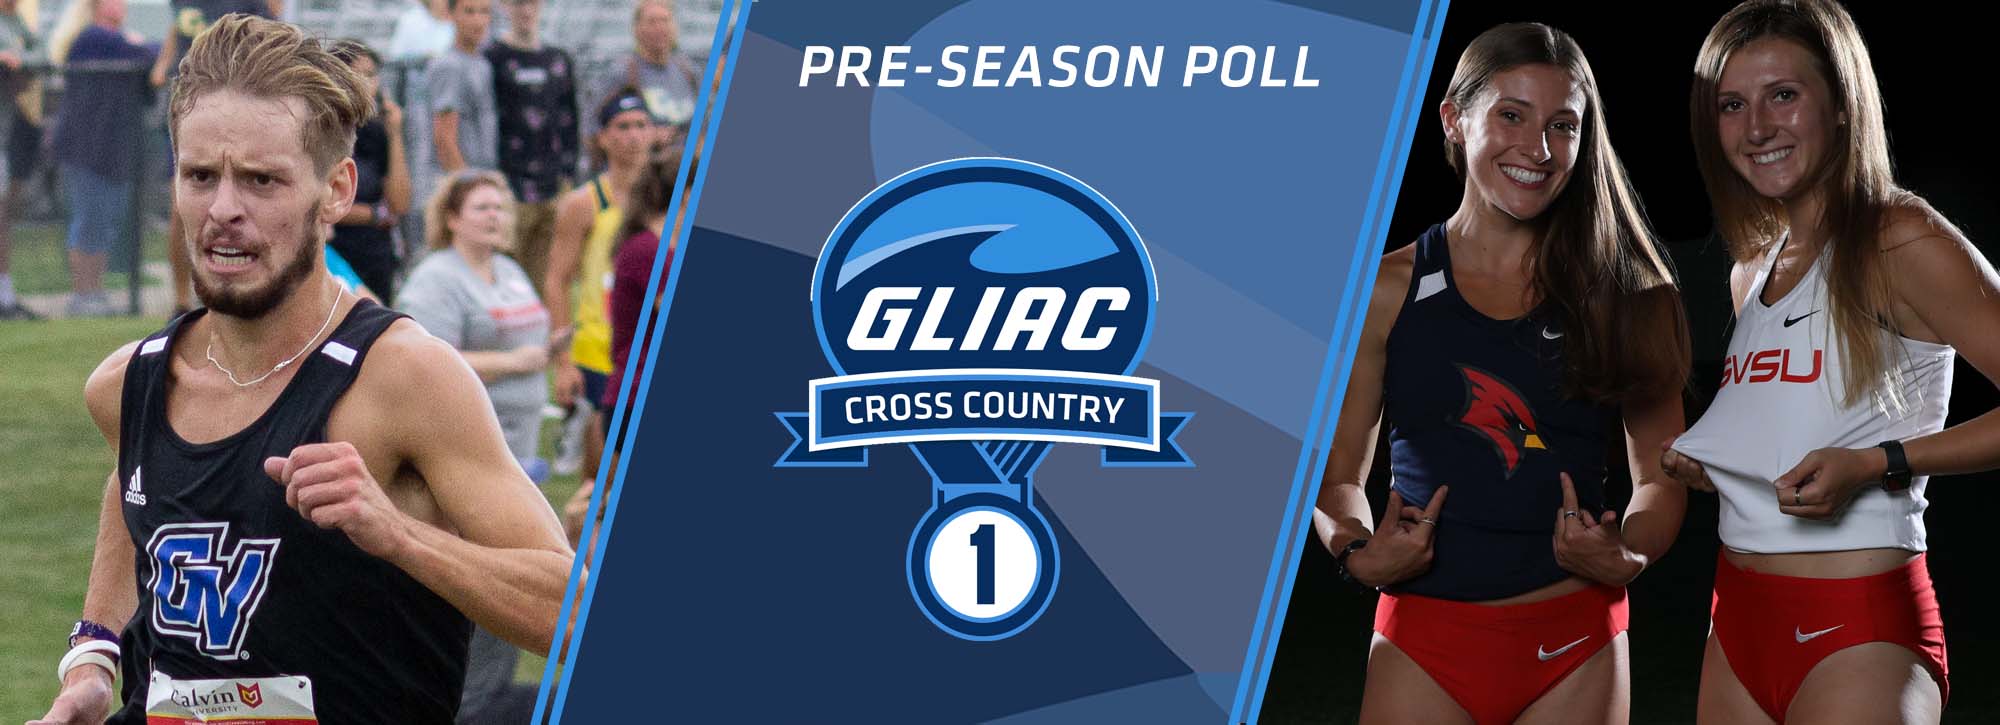 GVSU claims top spot in men's and women's cross country pre-season polls